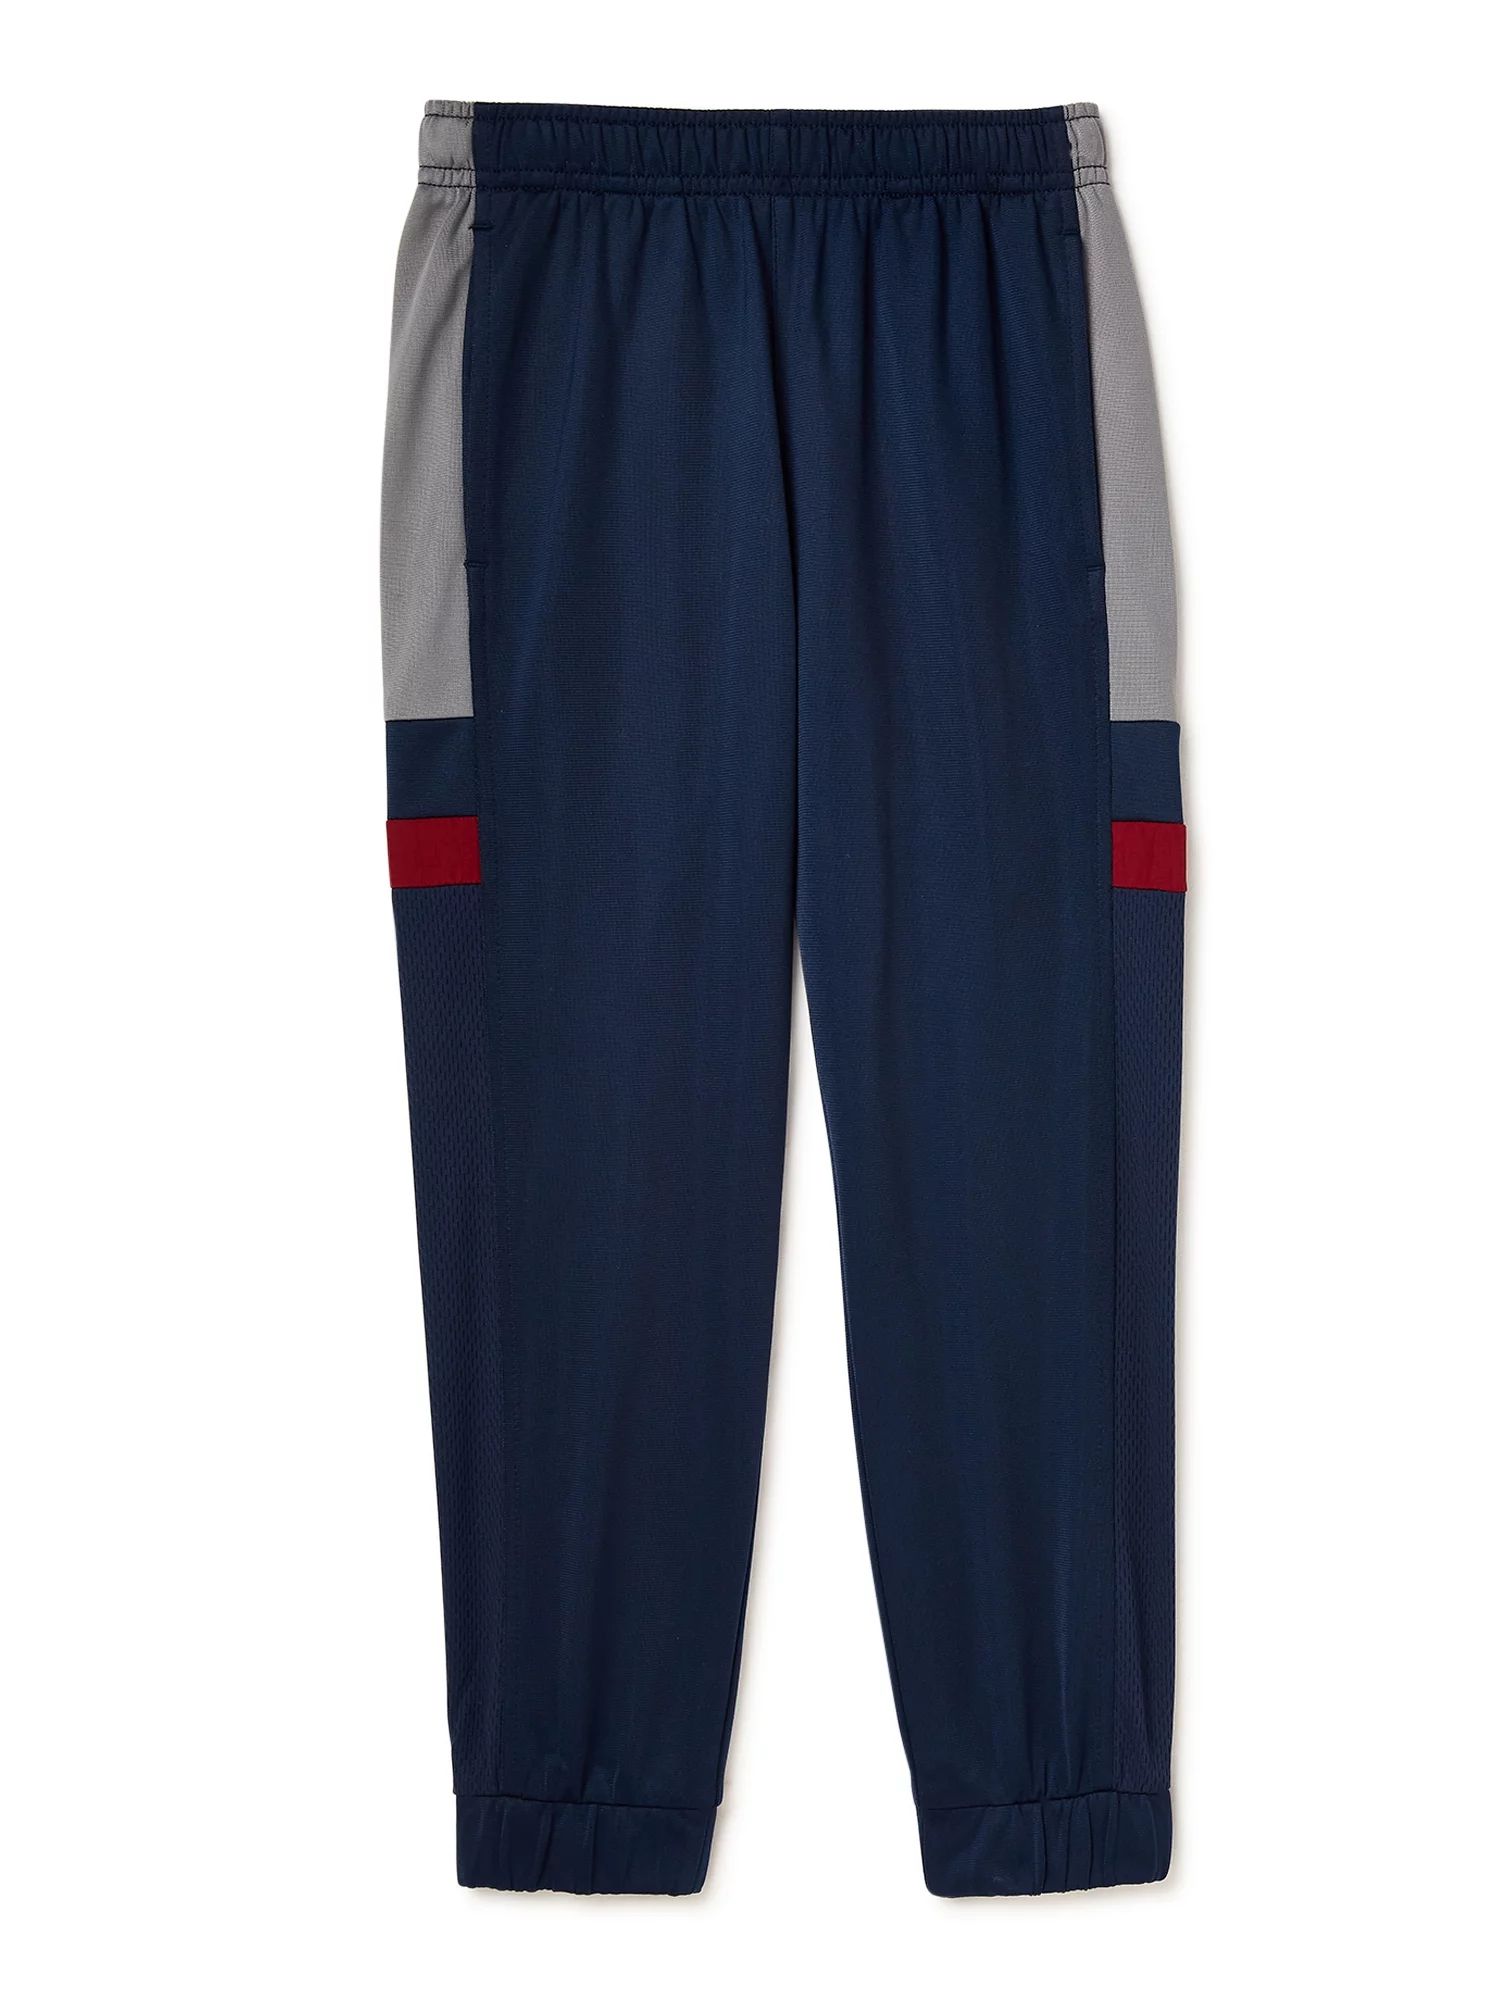 Athletic Works Boys Tricot Pants, Sizes 4-18 & Husky | Walmart (US)